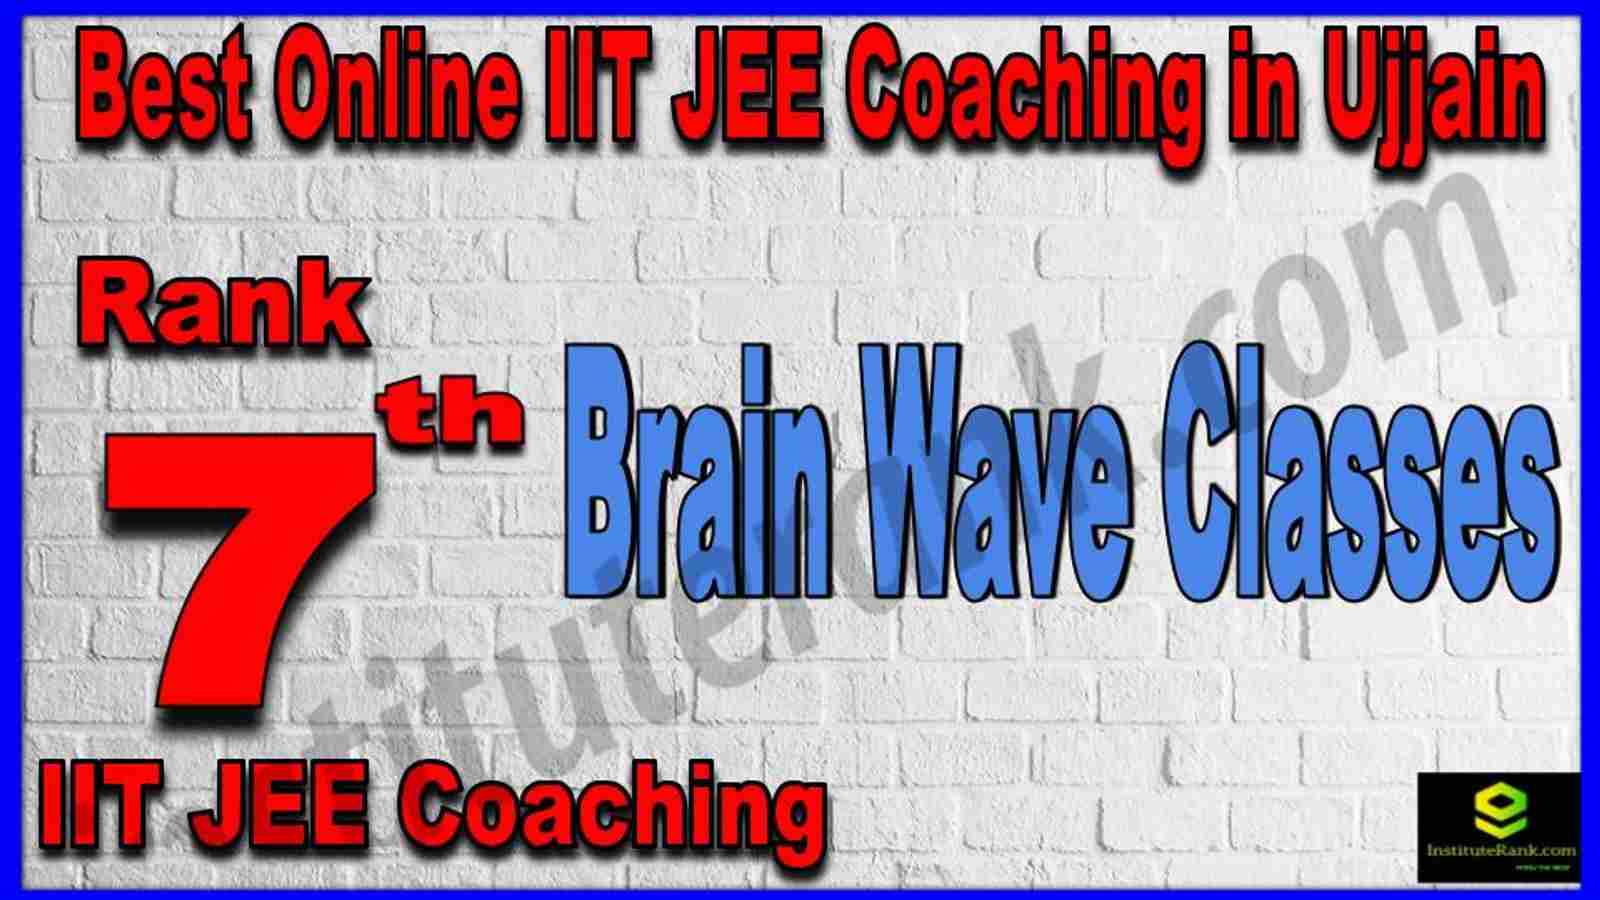 Rank 7th Best Online IIT-JEE Coaching in Ujjain